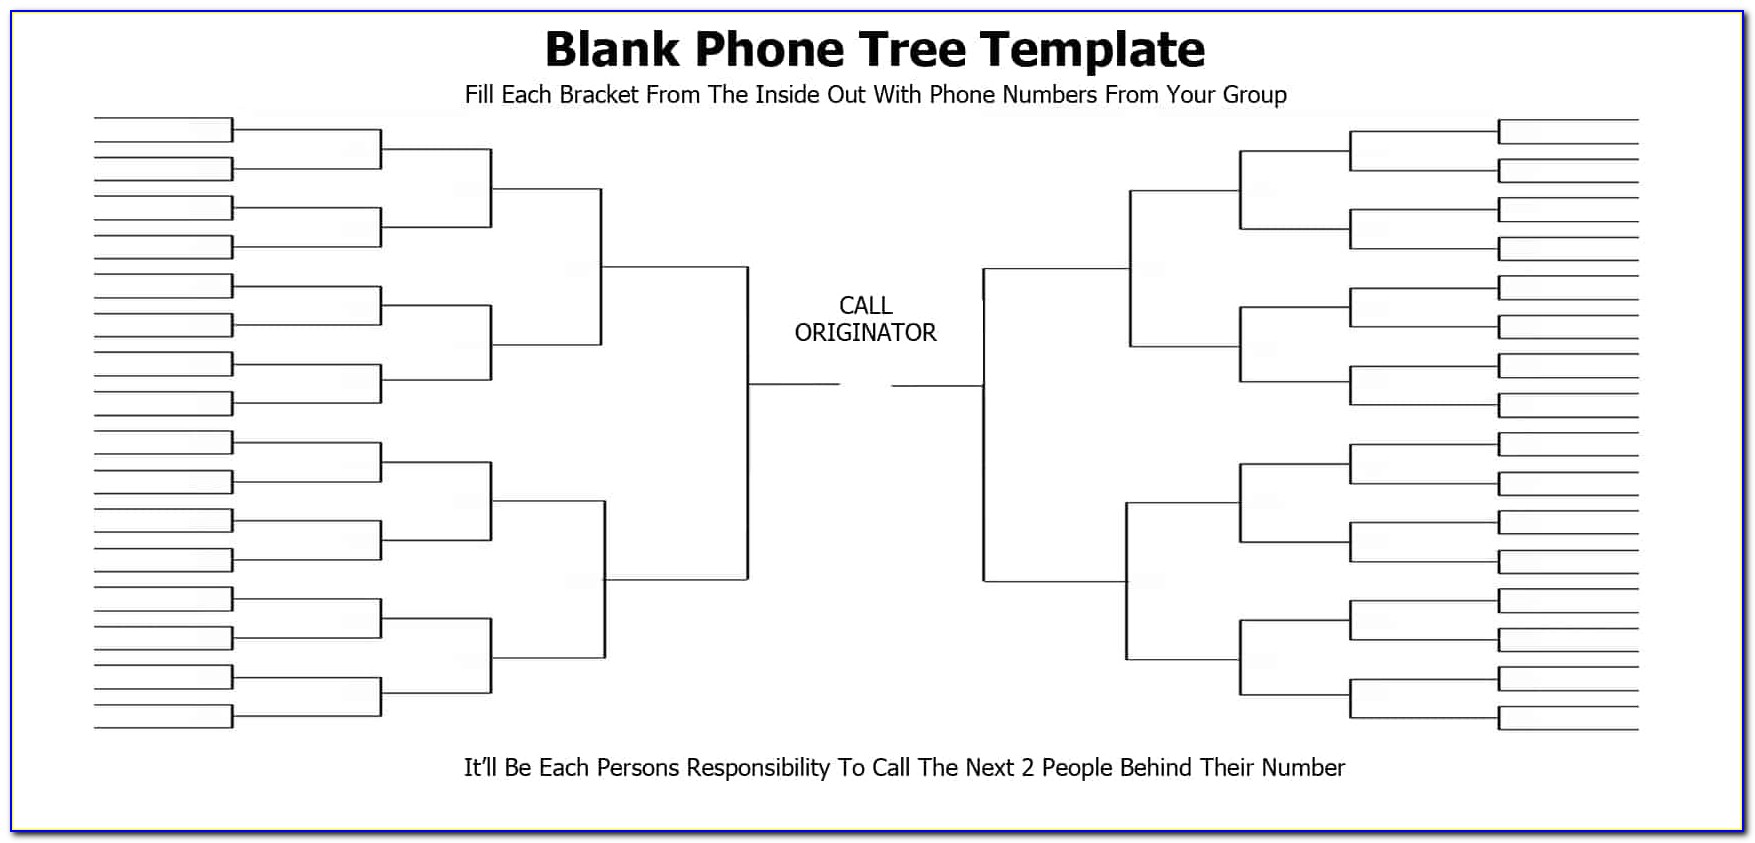 Free Blank Phone Tree Template